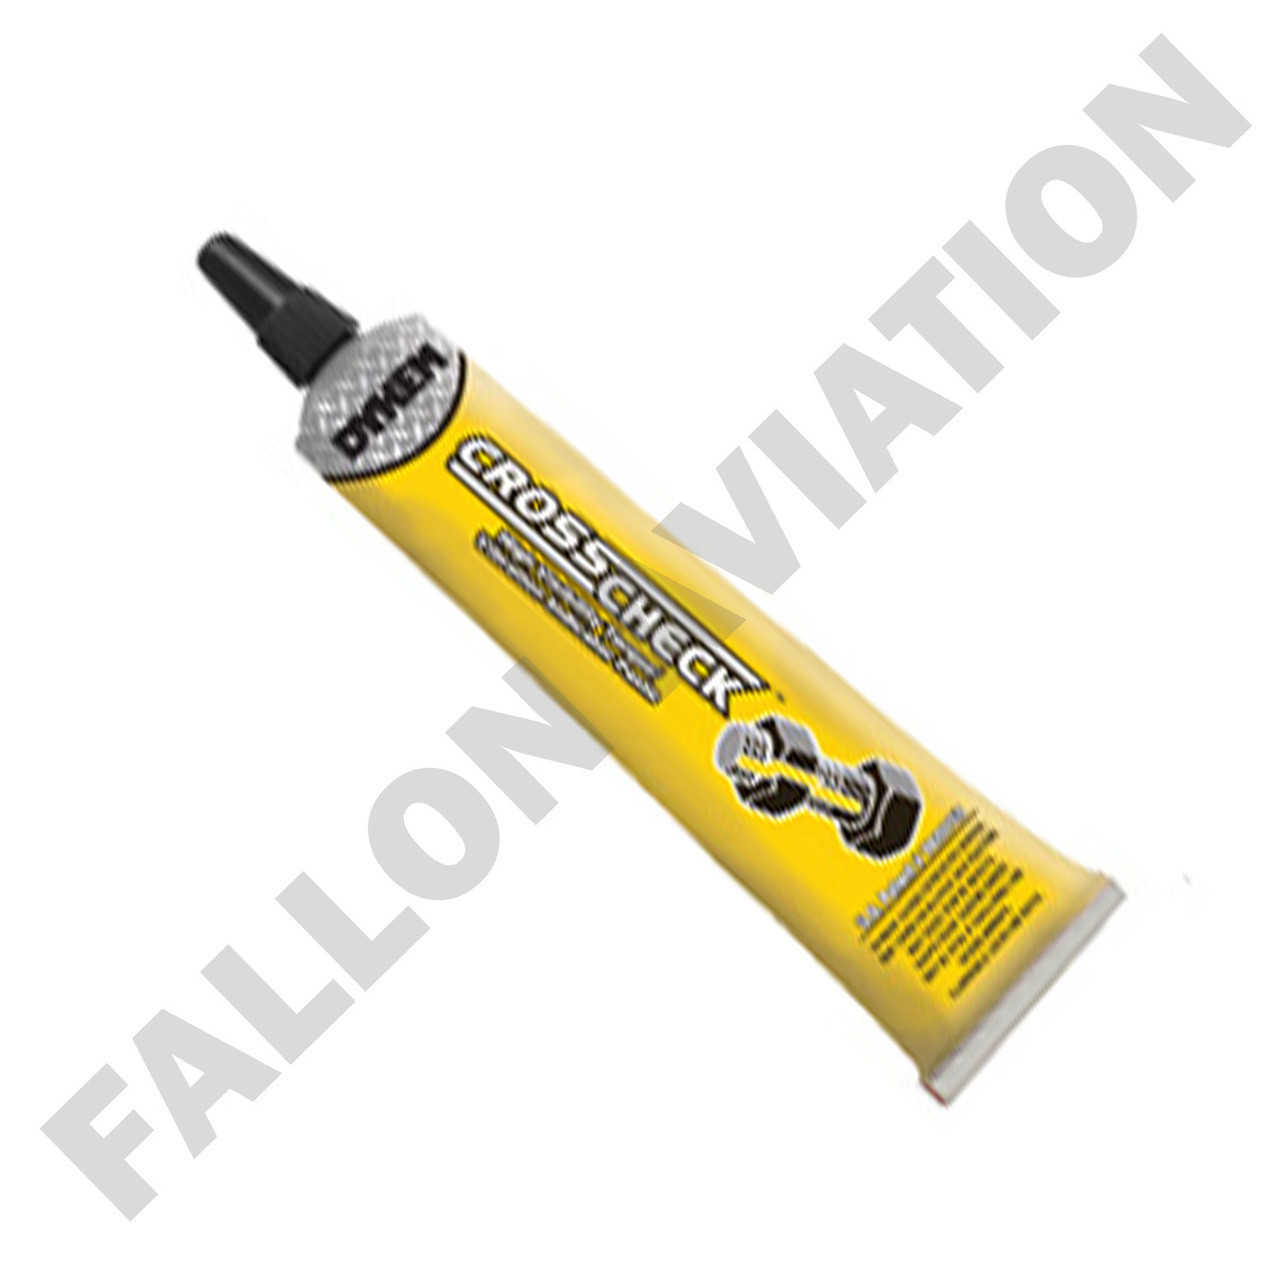 ITW Dykem Cross Check Torque Seal Yellow Tamper-Proof Indicator Paste  Fallon Aviation Pilot Shop